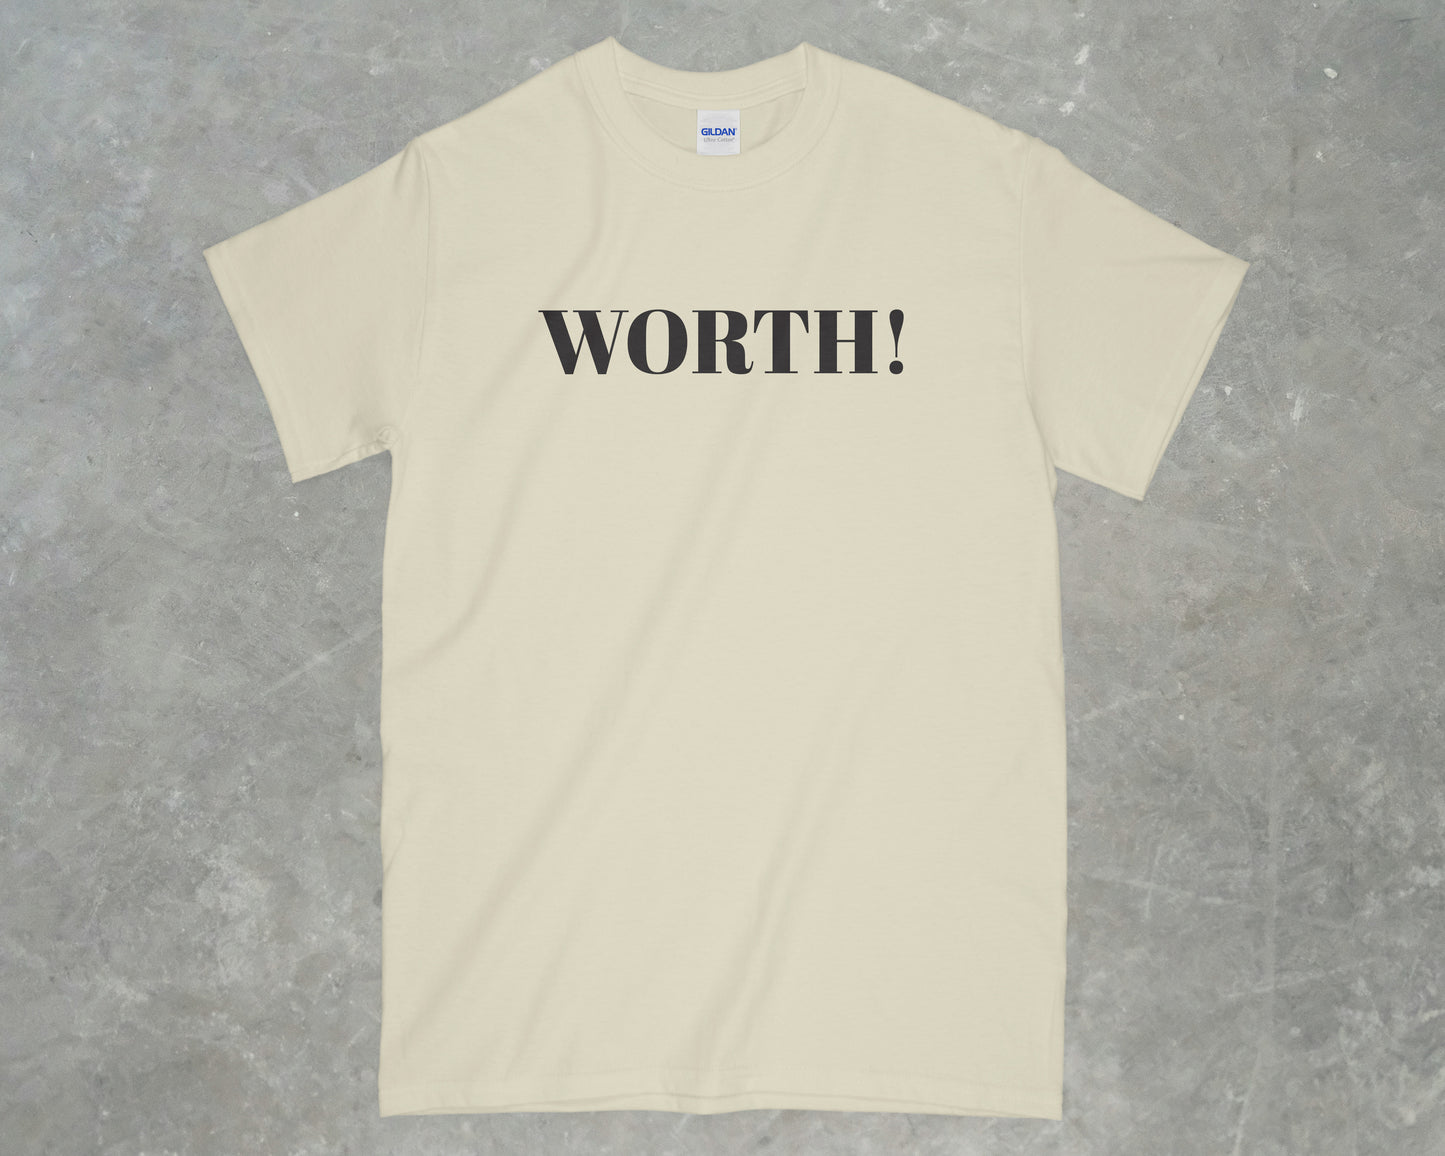 Worth! Shirt